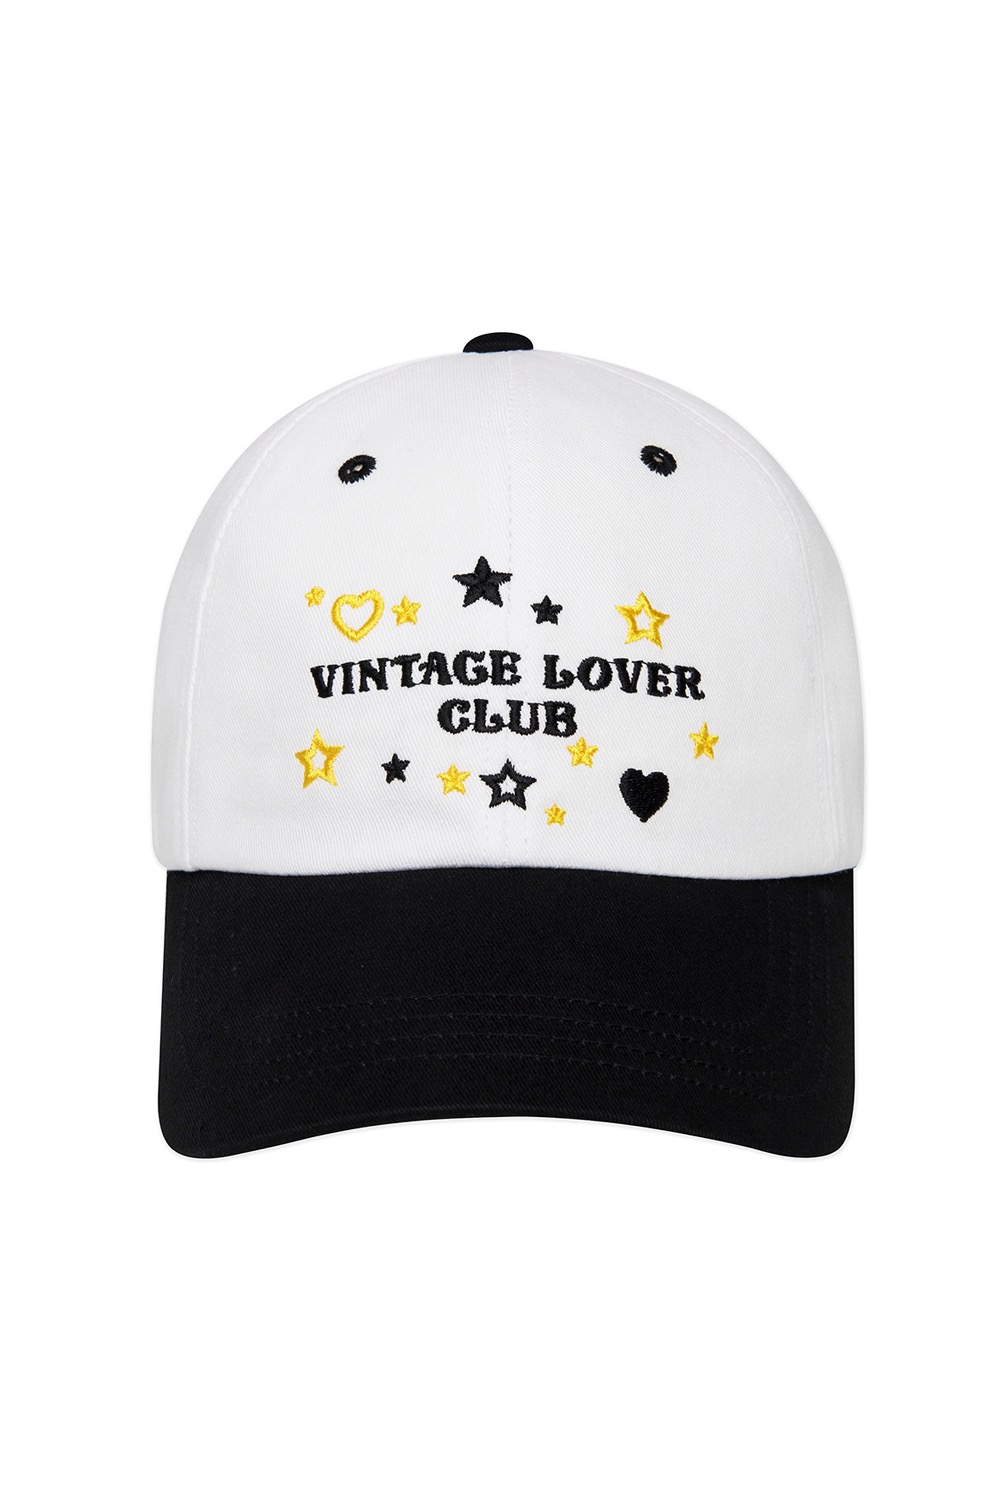 Vintage lover club ball cap(11/17 예약발송)